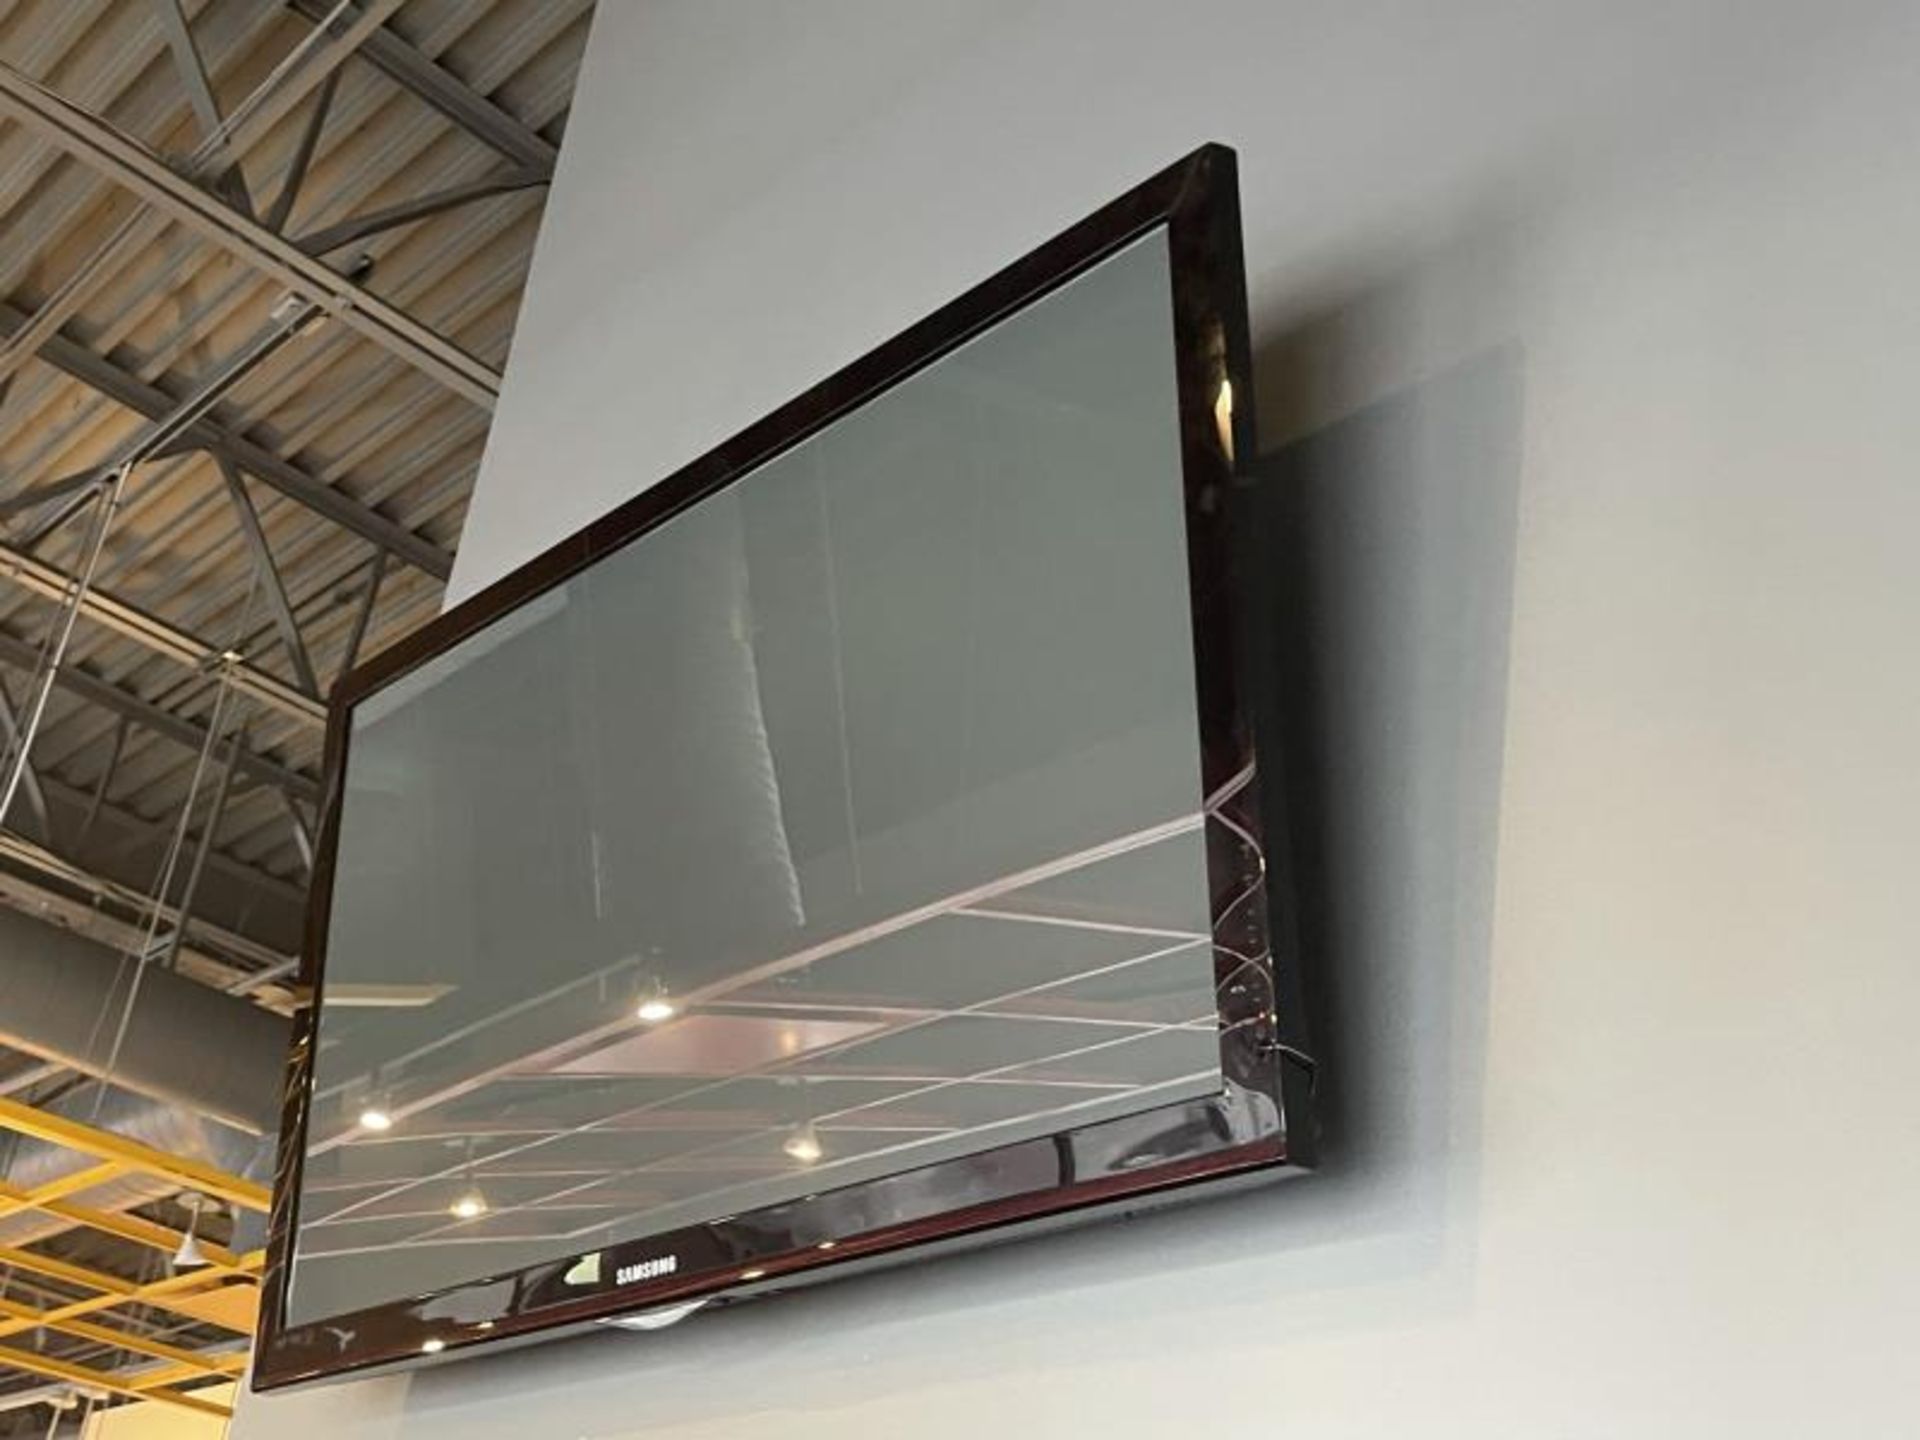 Samsung Flat Panel TV approx. 48"